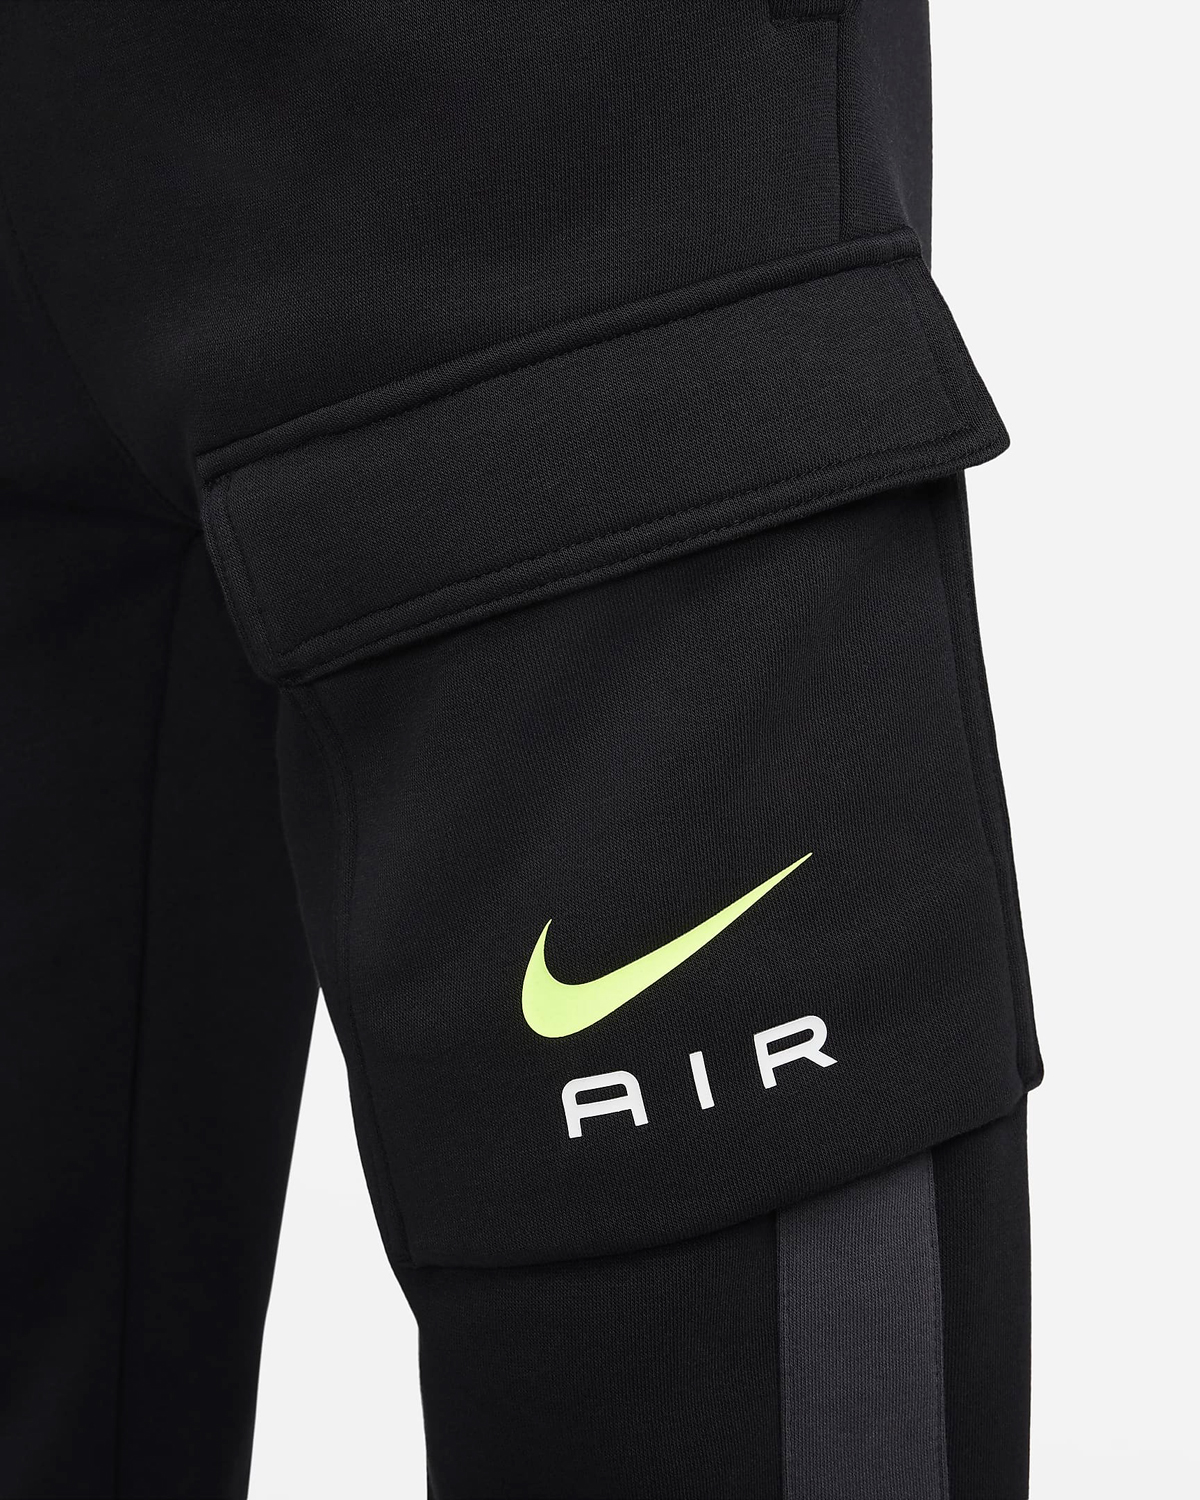 Nike-Air-Fleece-Cargo-Pants-Black-Anthracite-Volt-2